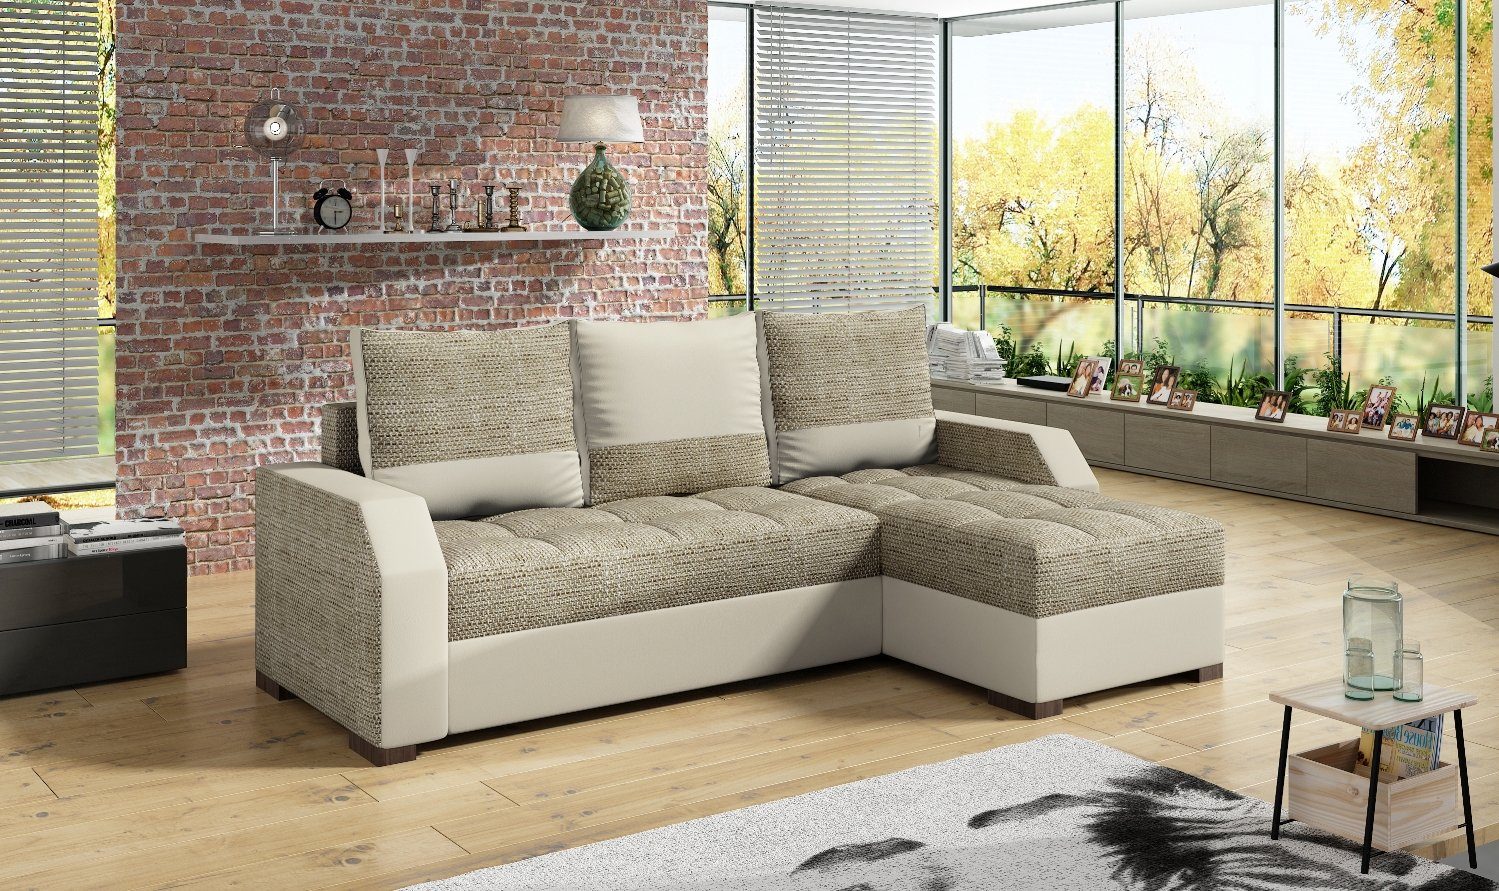 JVmoebel Ecksofa, Design Couchen Polster Bettfunktion Ecksofa Beige Sofas Couch Textil Leder